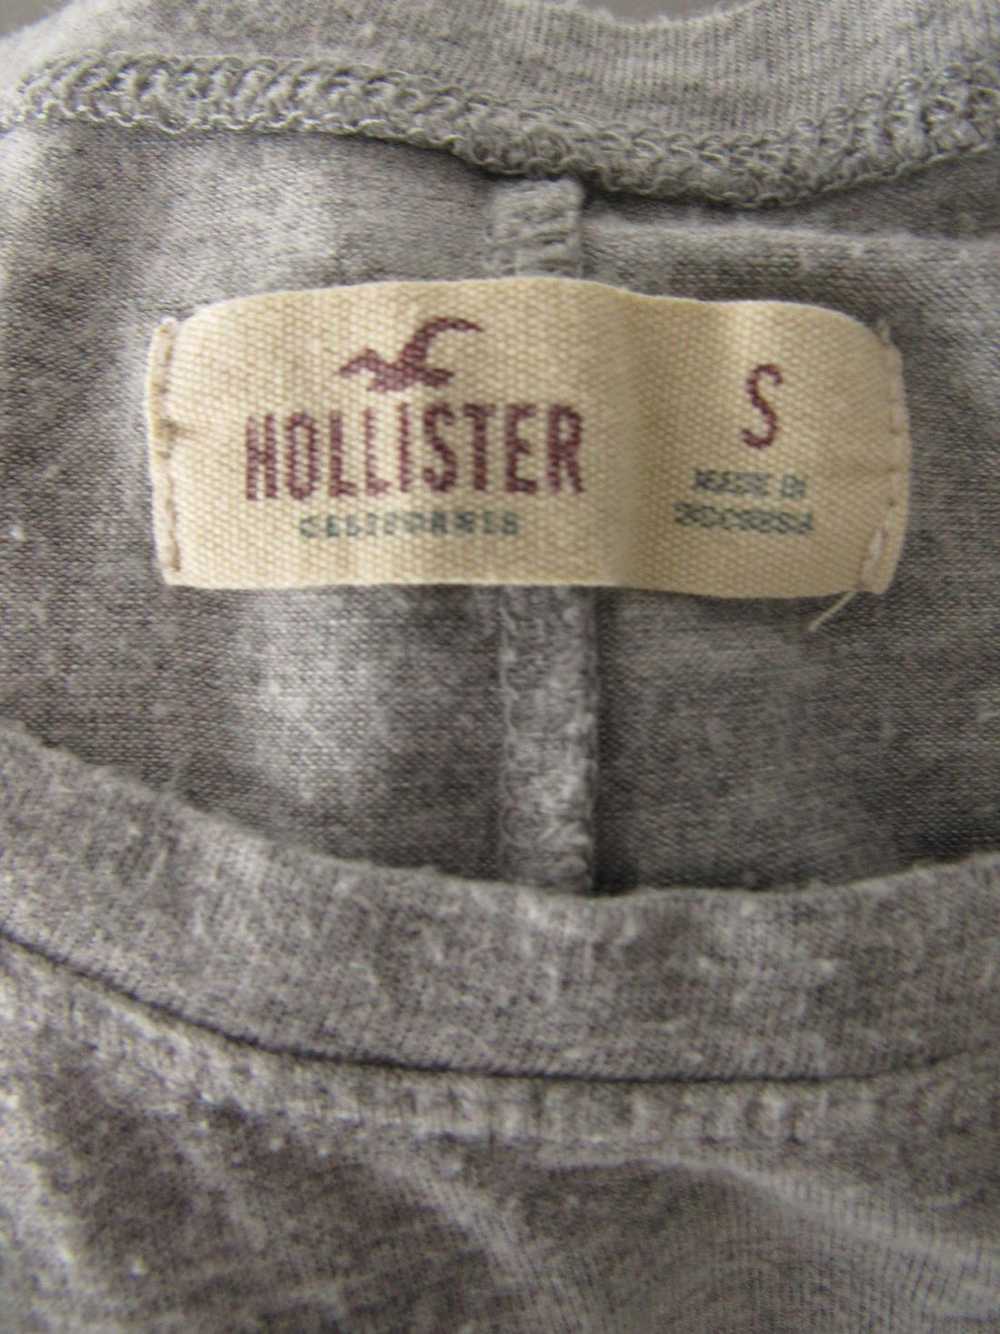 Hollister Knit Top - image 3